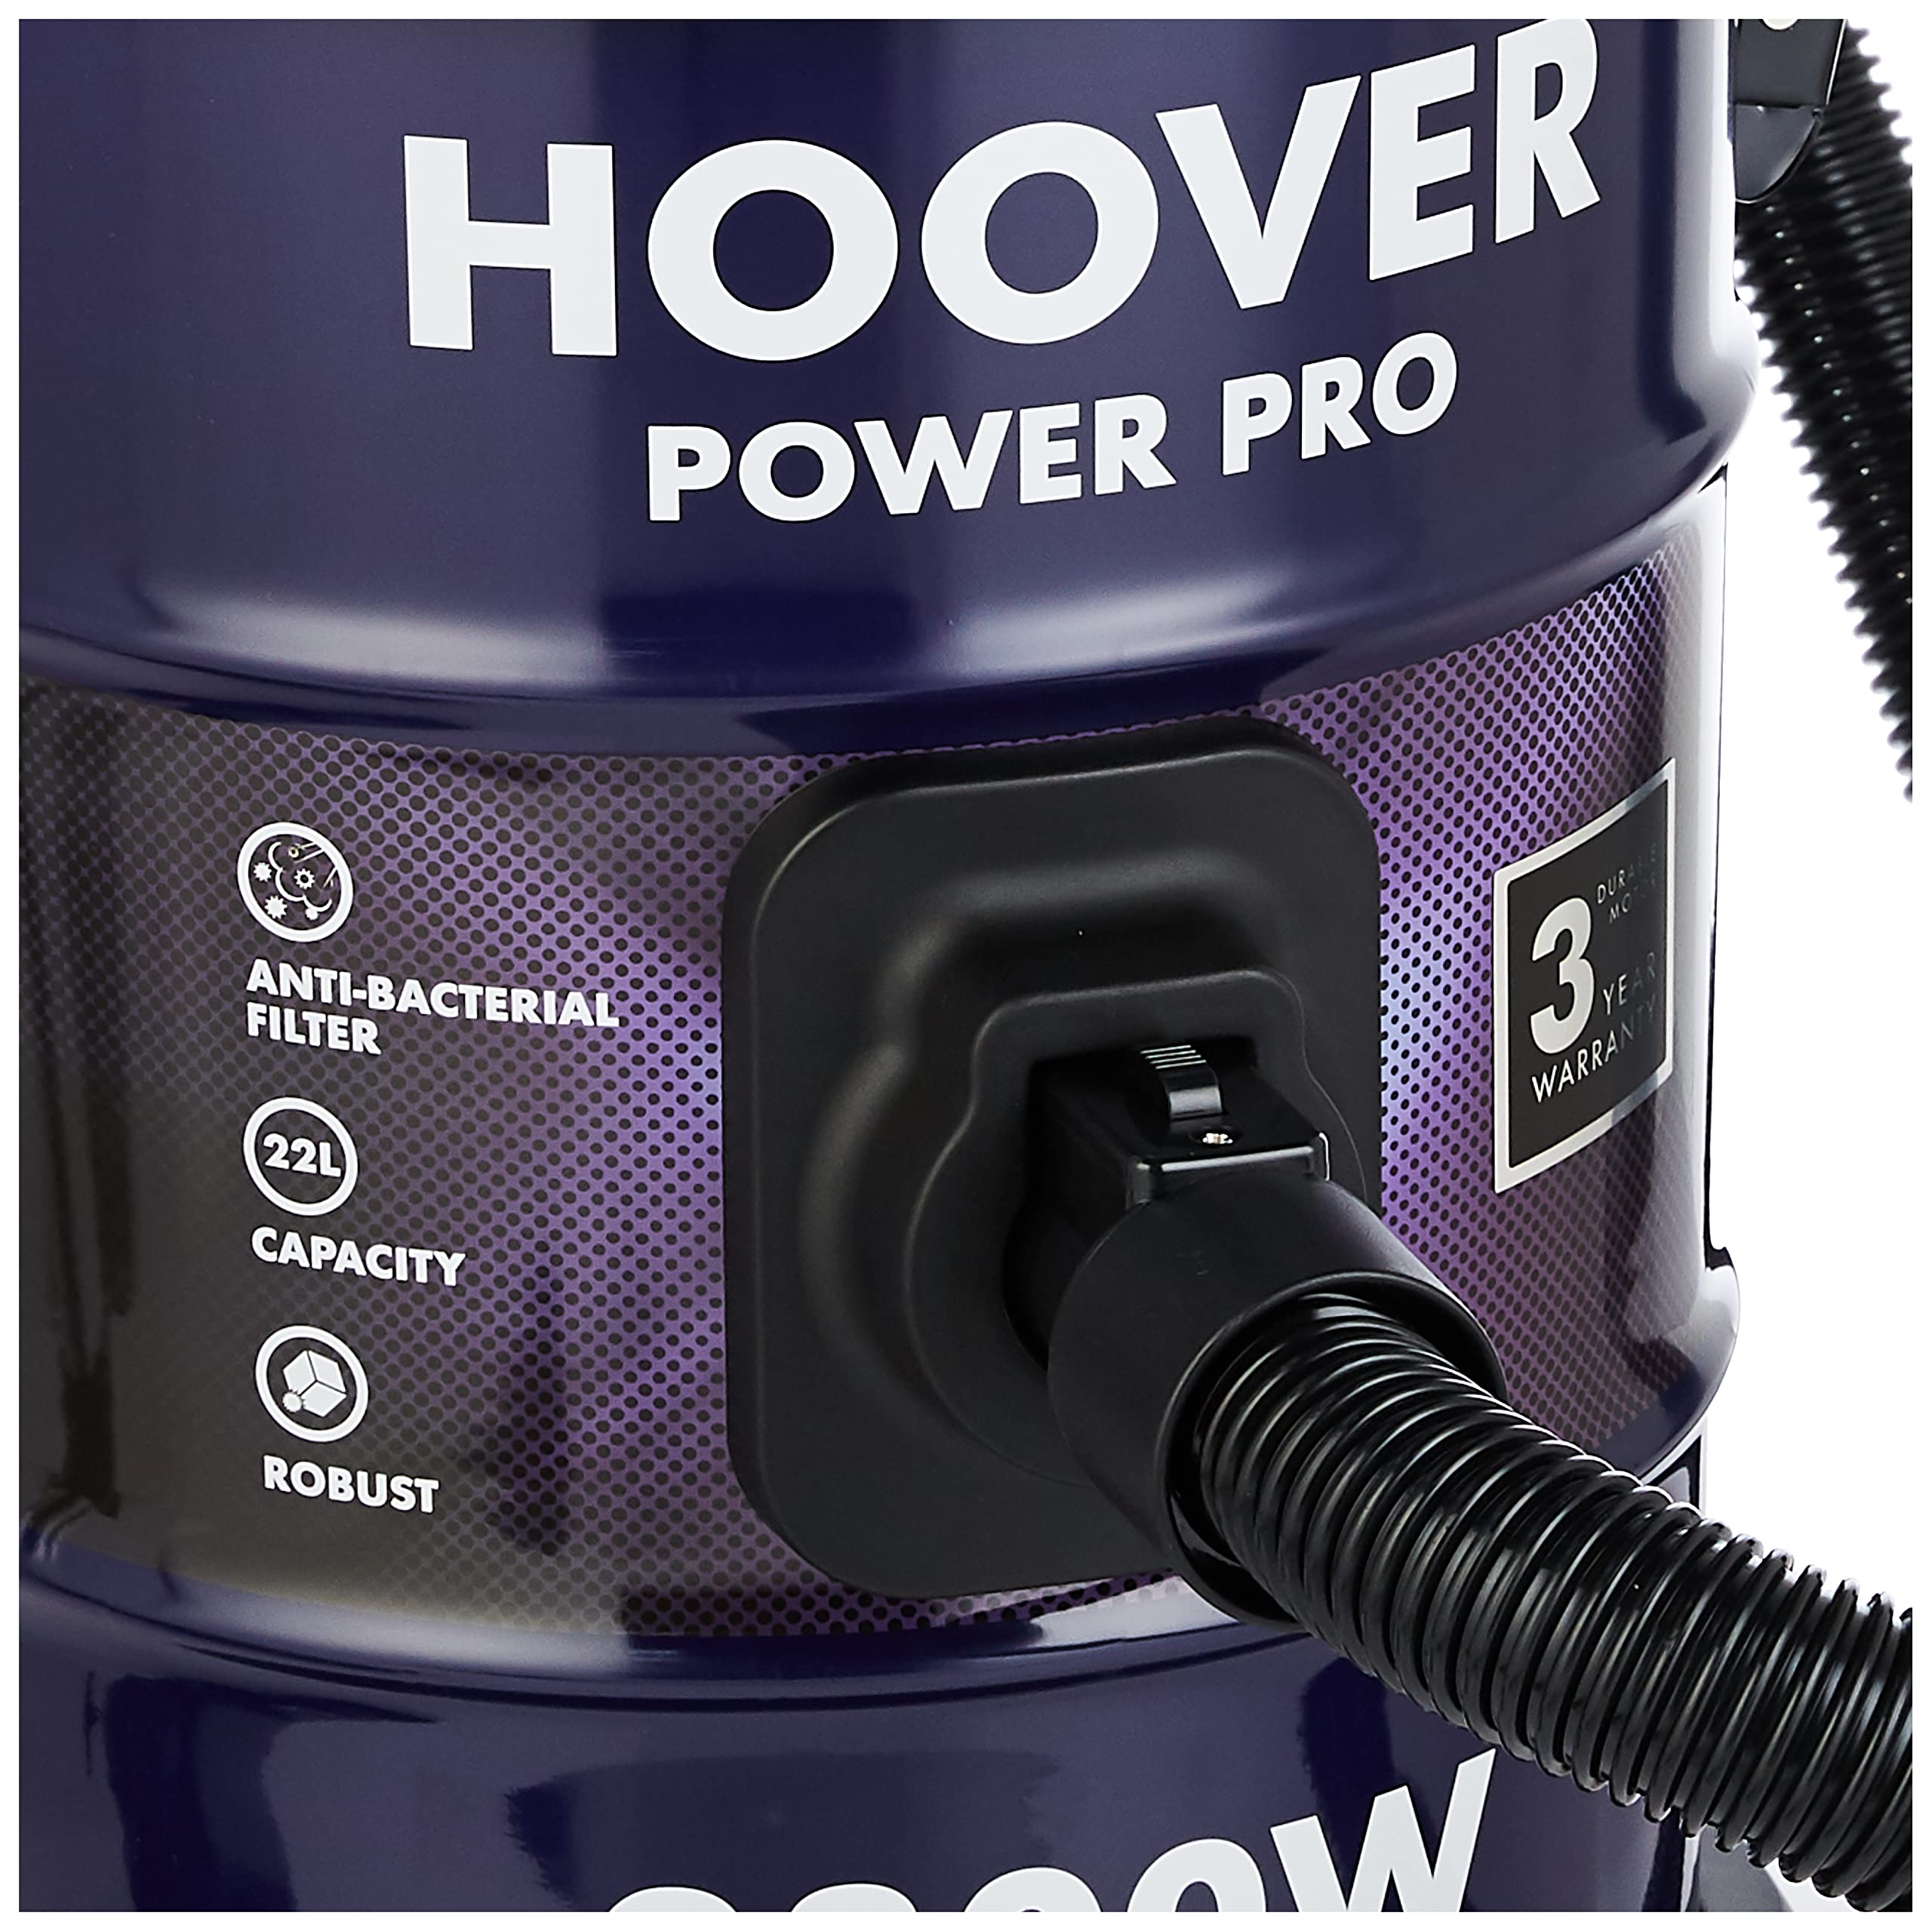 Hoover Power Pro Drum Vacuum Cleaner 22 Litre XL Large Capacity, 2300W مكنسة كهربائية هوفر 2300 واط باور برو تانك - ارجواني